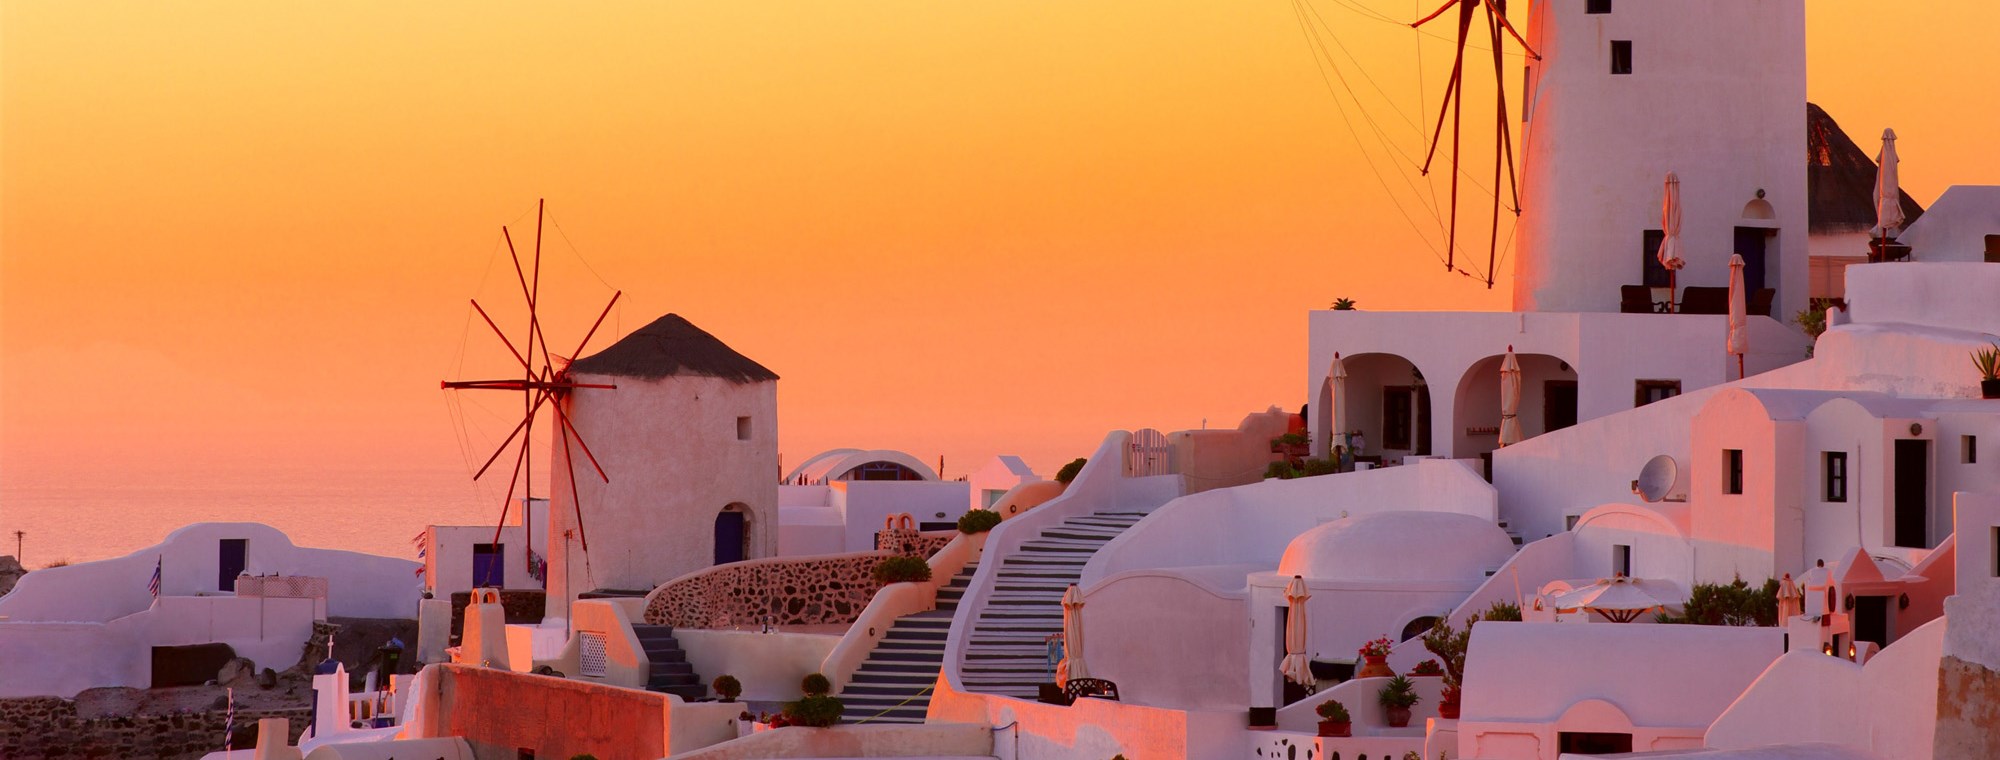 Oia village at sunset, Santorini Island, Greece